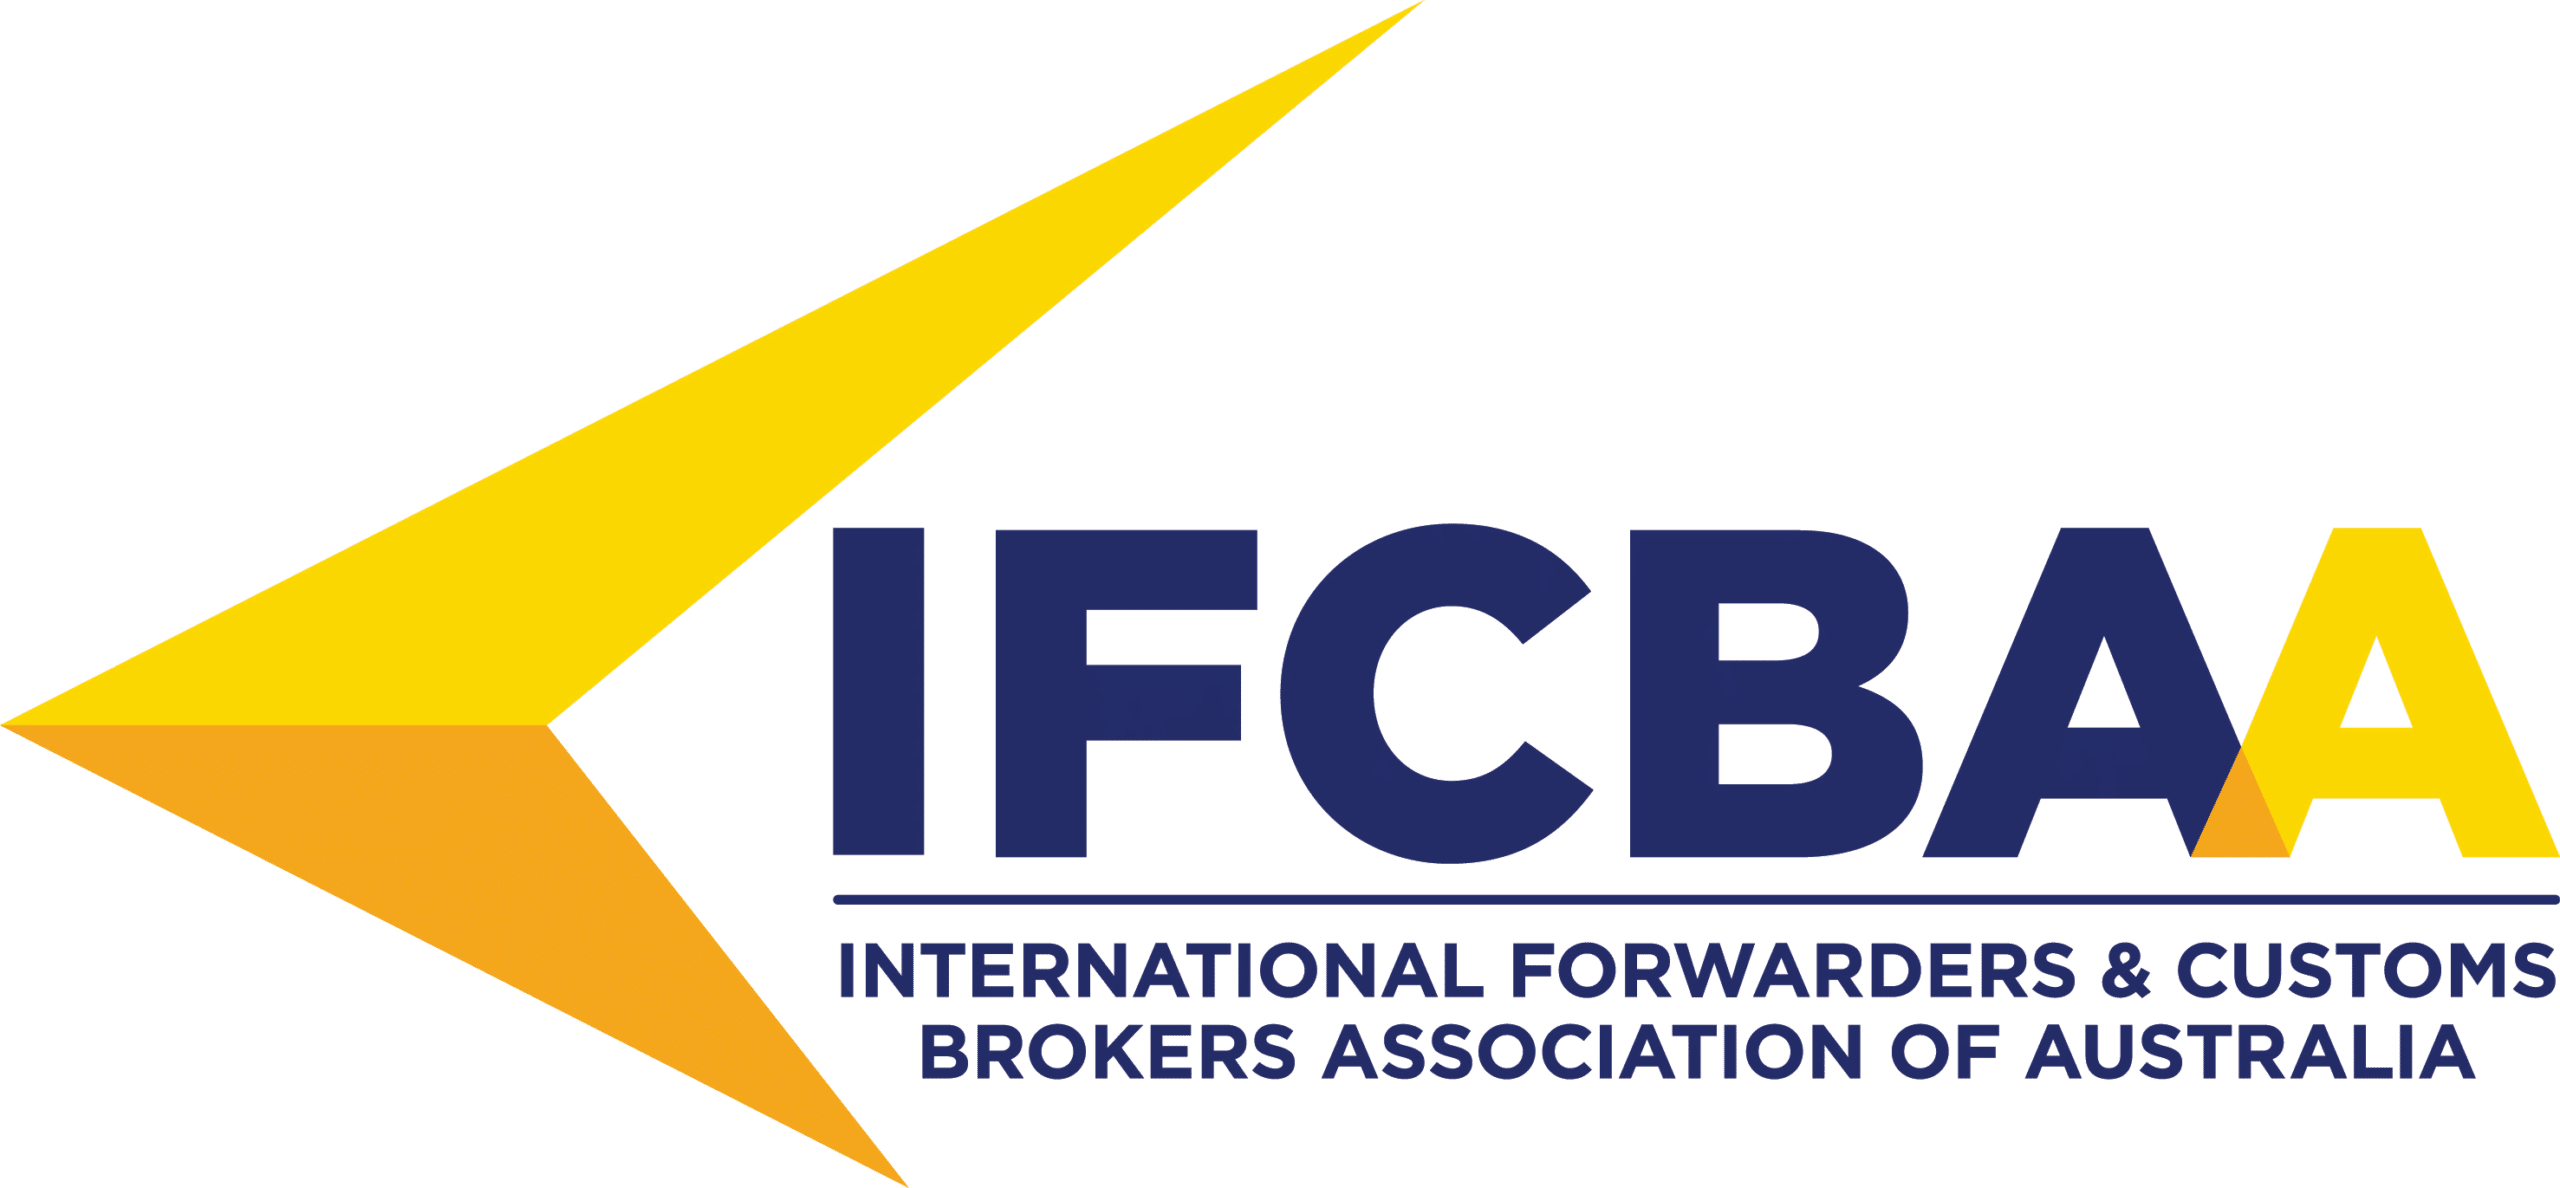 IFCBAA-Primary-Logo-CMYK